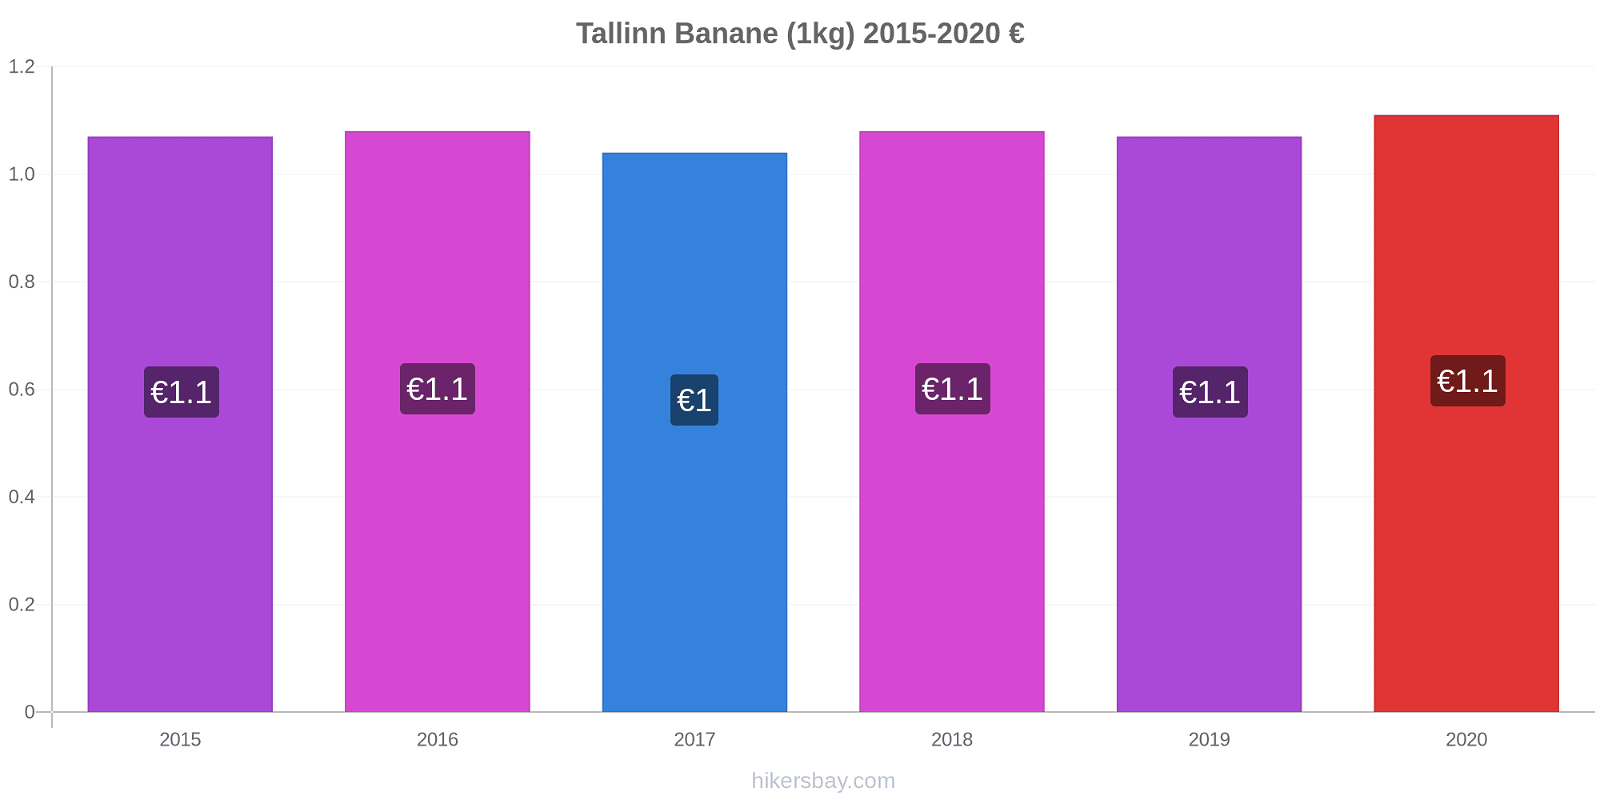 Tallinn variazioni di prezzo Banana (1kg) hikersbay.com